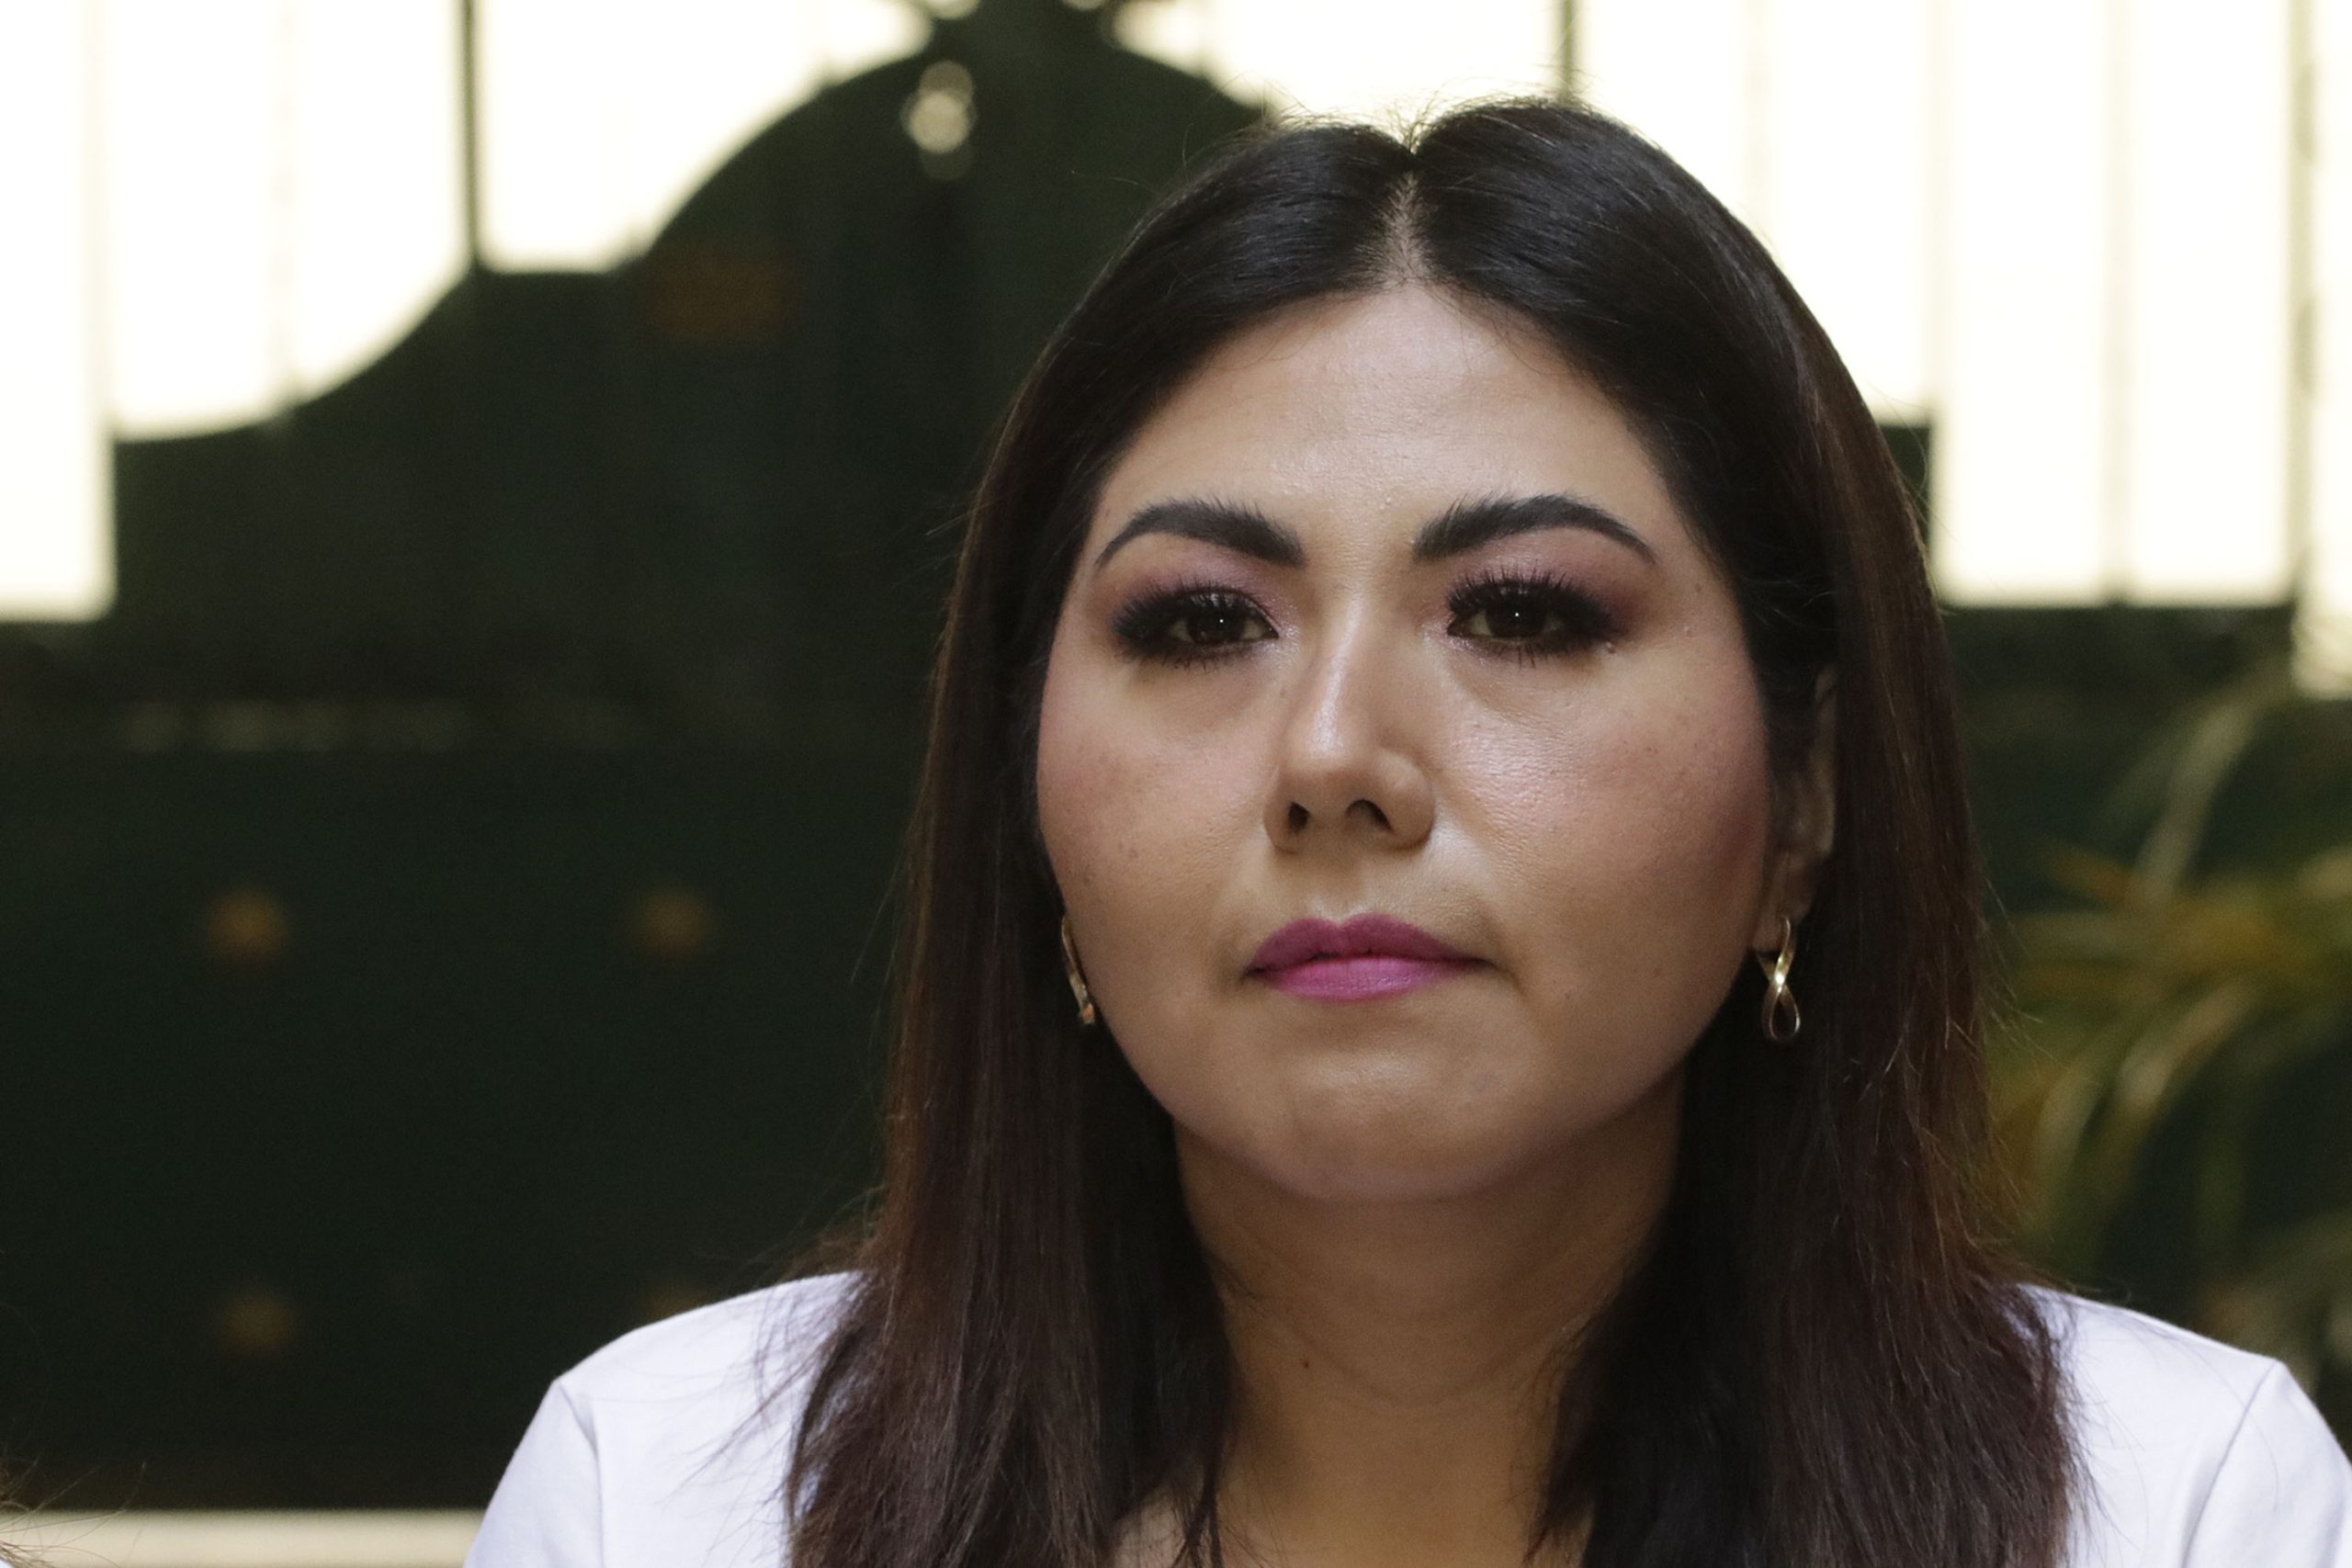 Evita diputada panista declarar sobre presunta omisión de violencia política de género